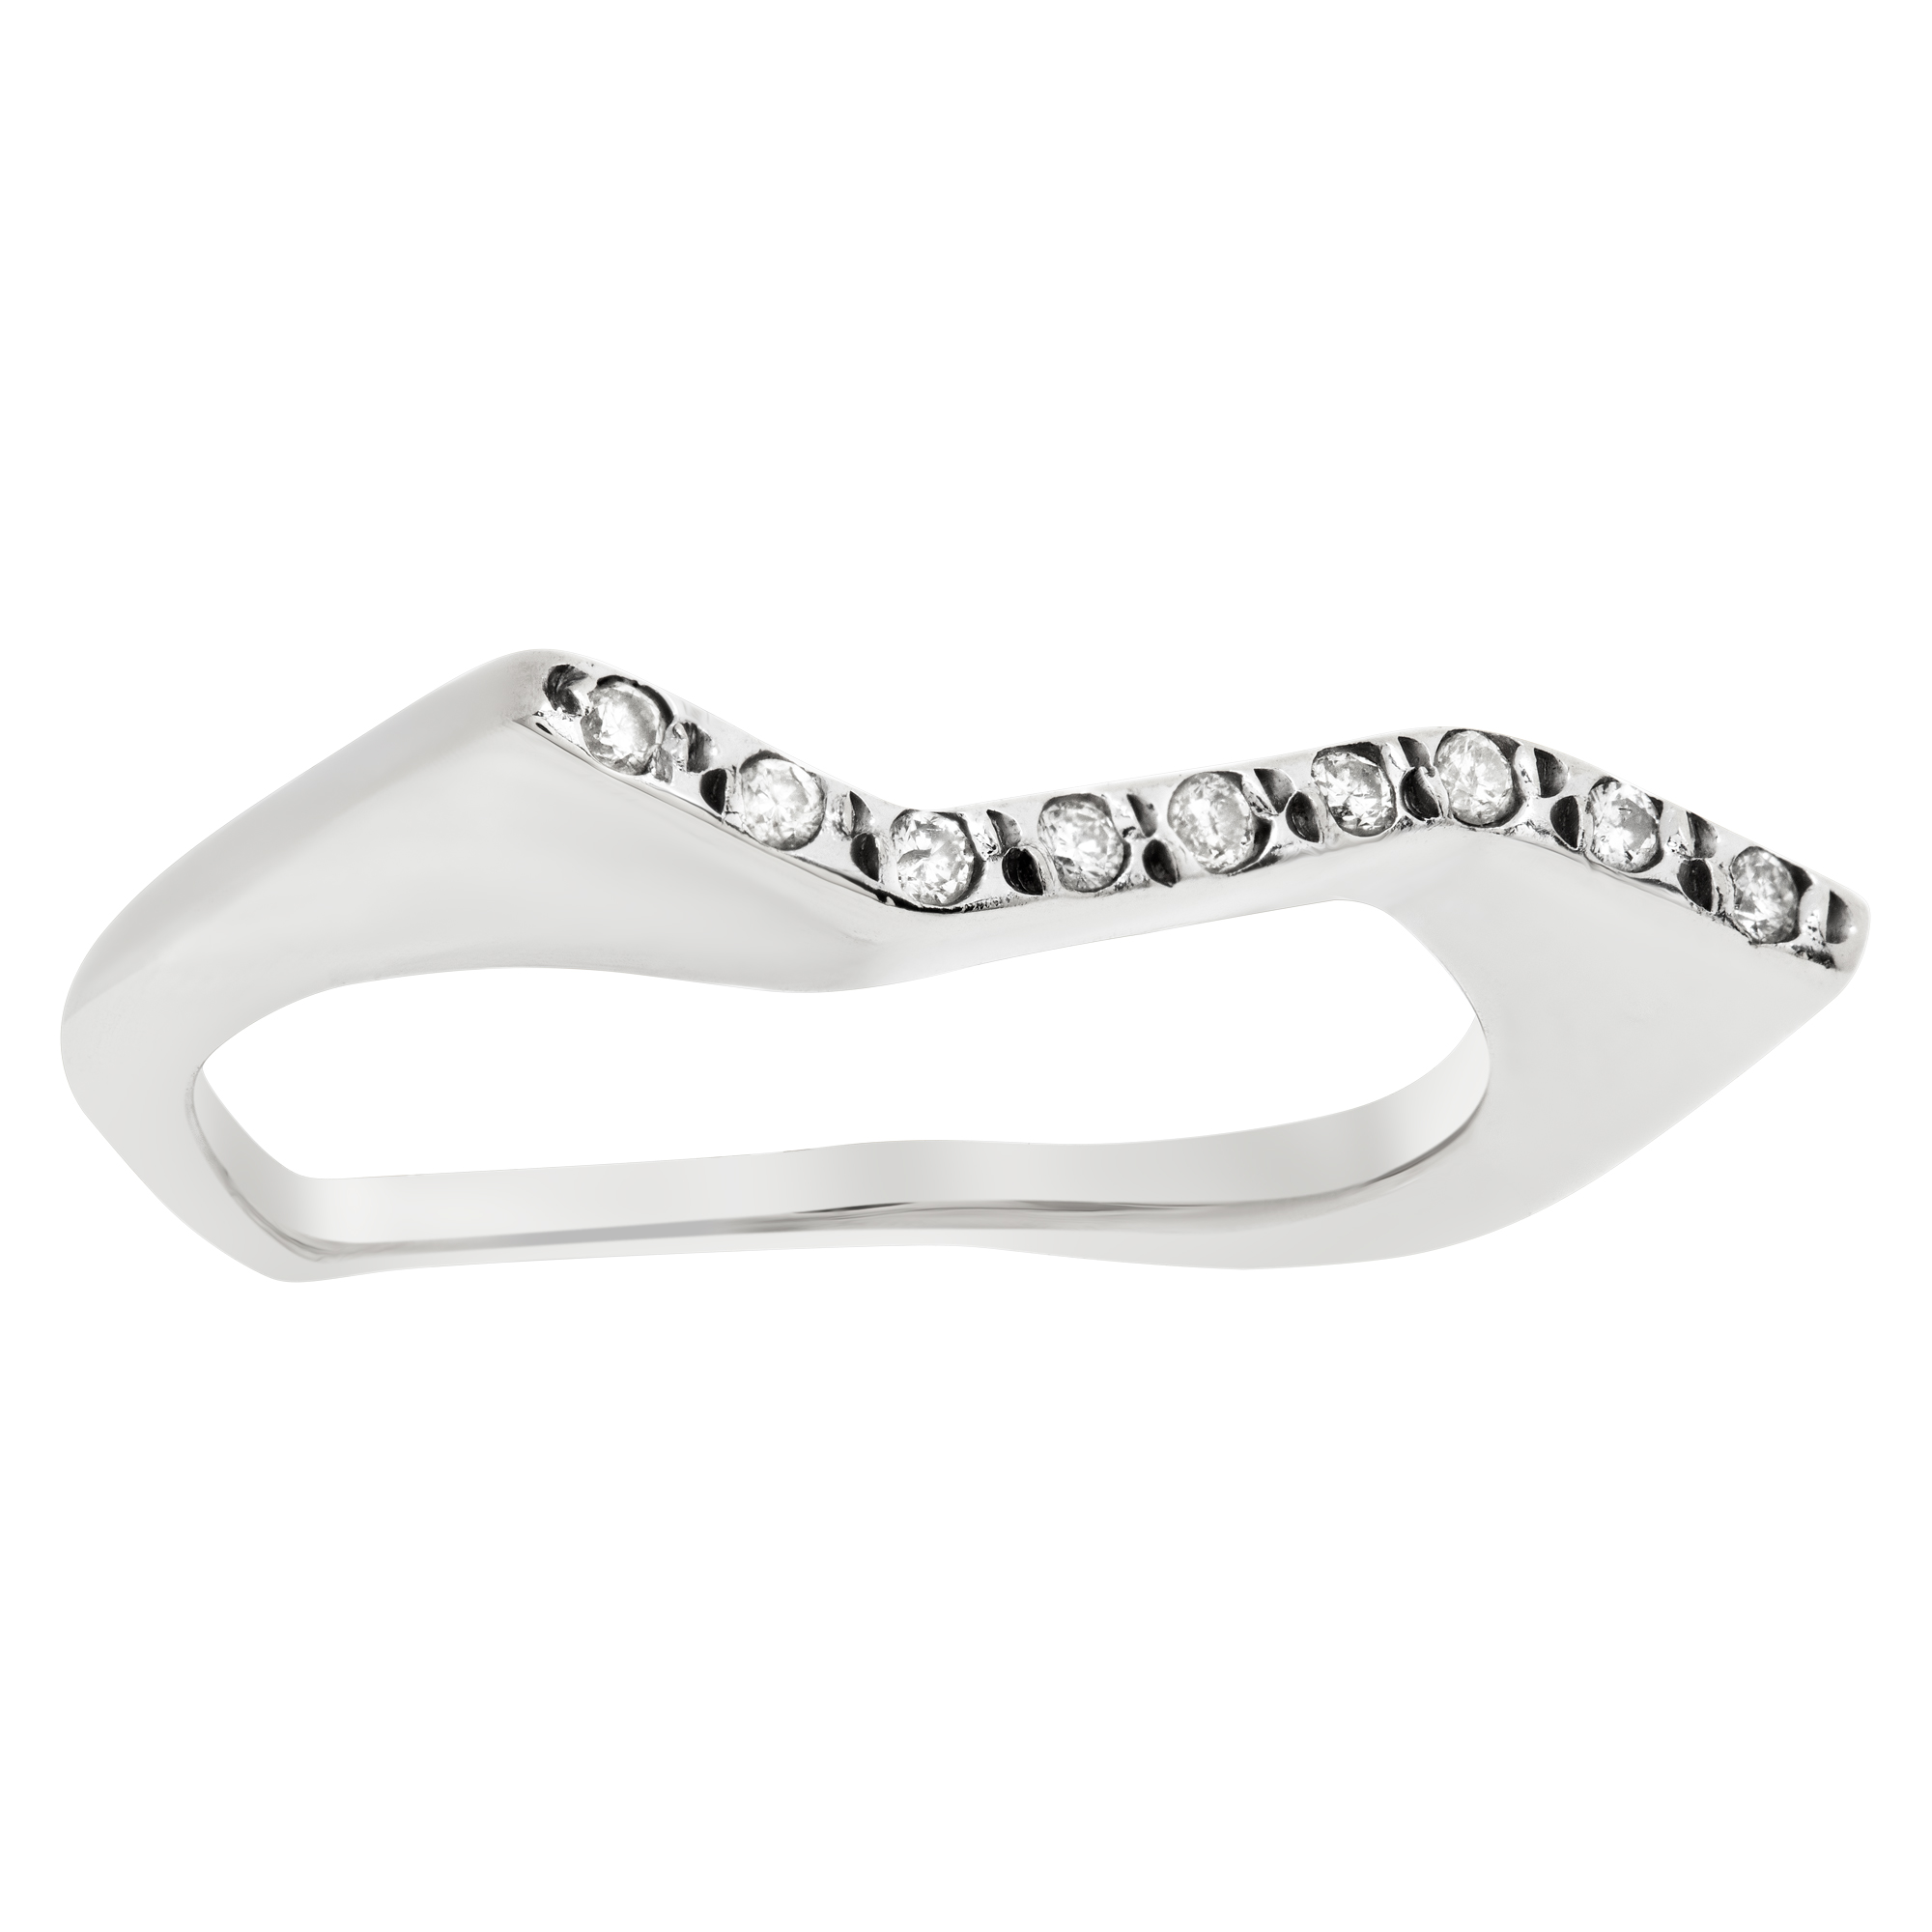 Zig-zag diamond line ring in 18k white gold, app. 0.10 carats. Size 8 image 1